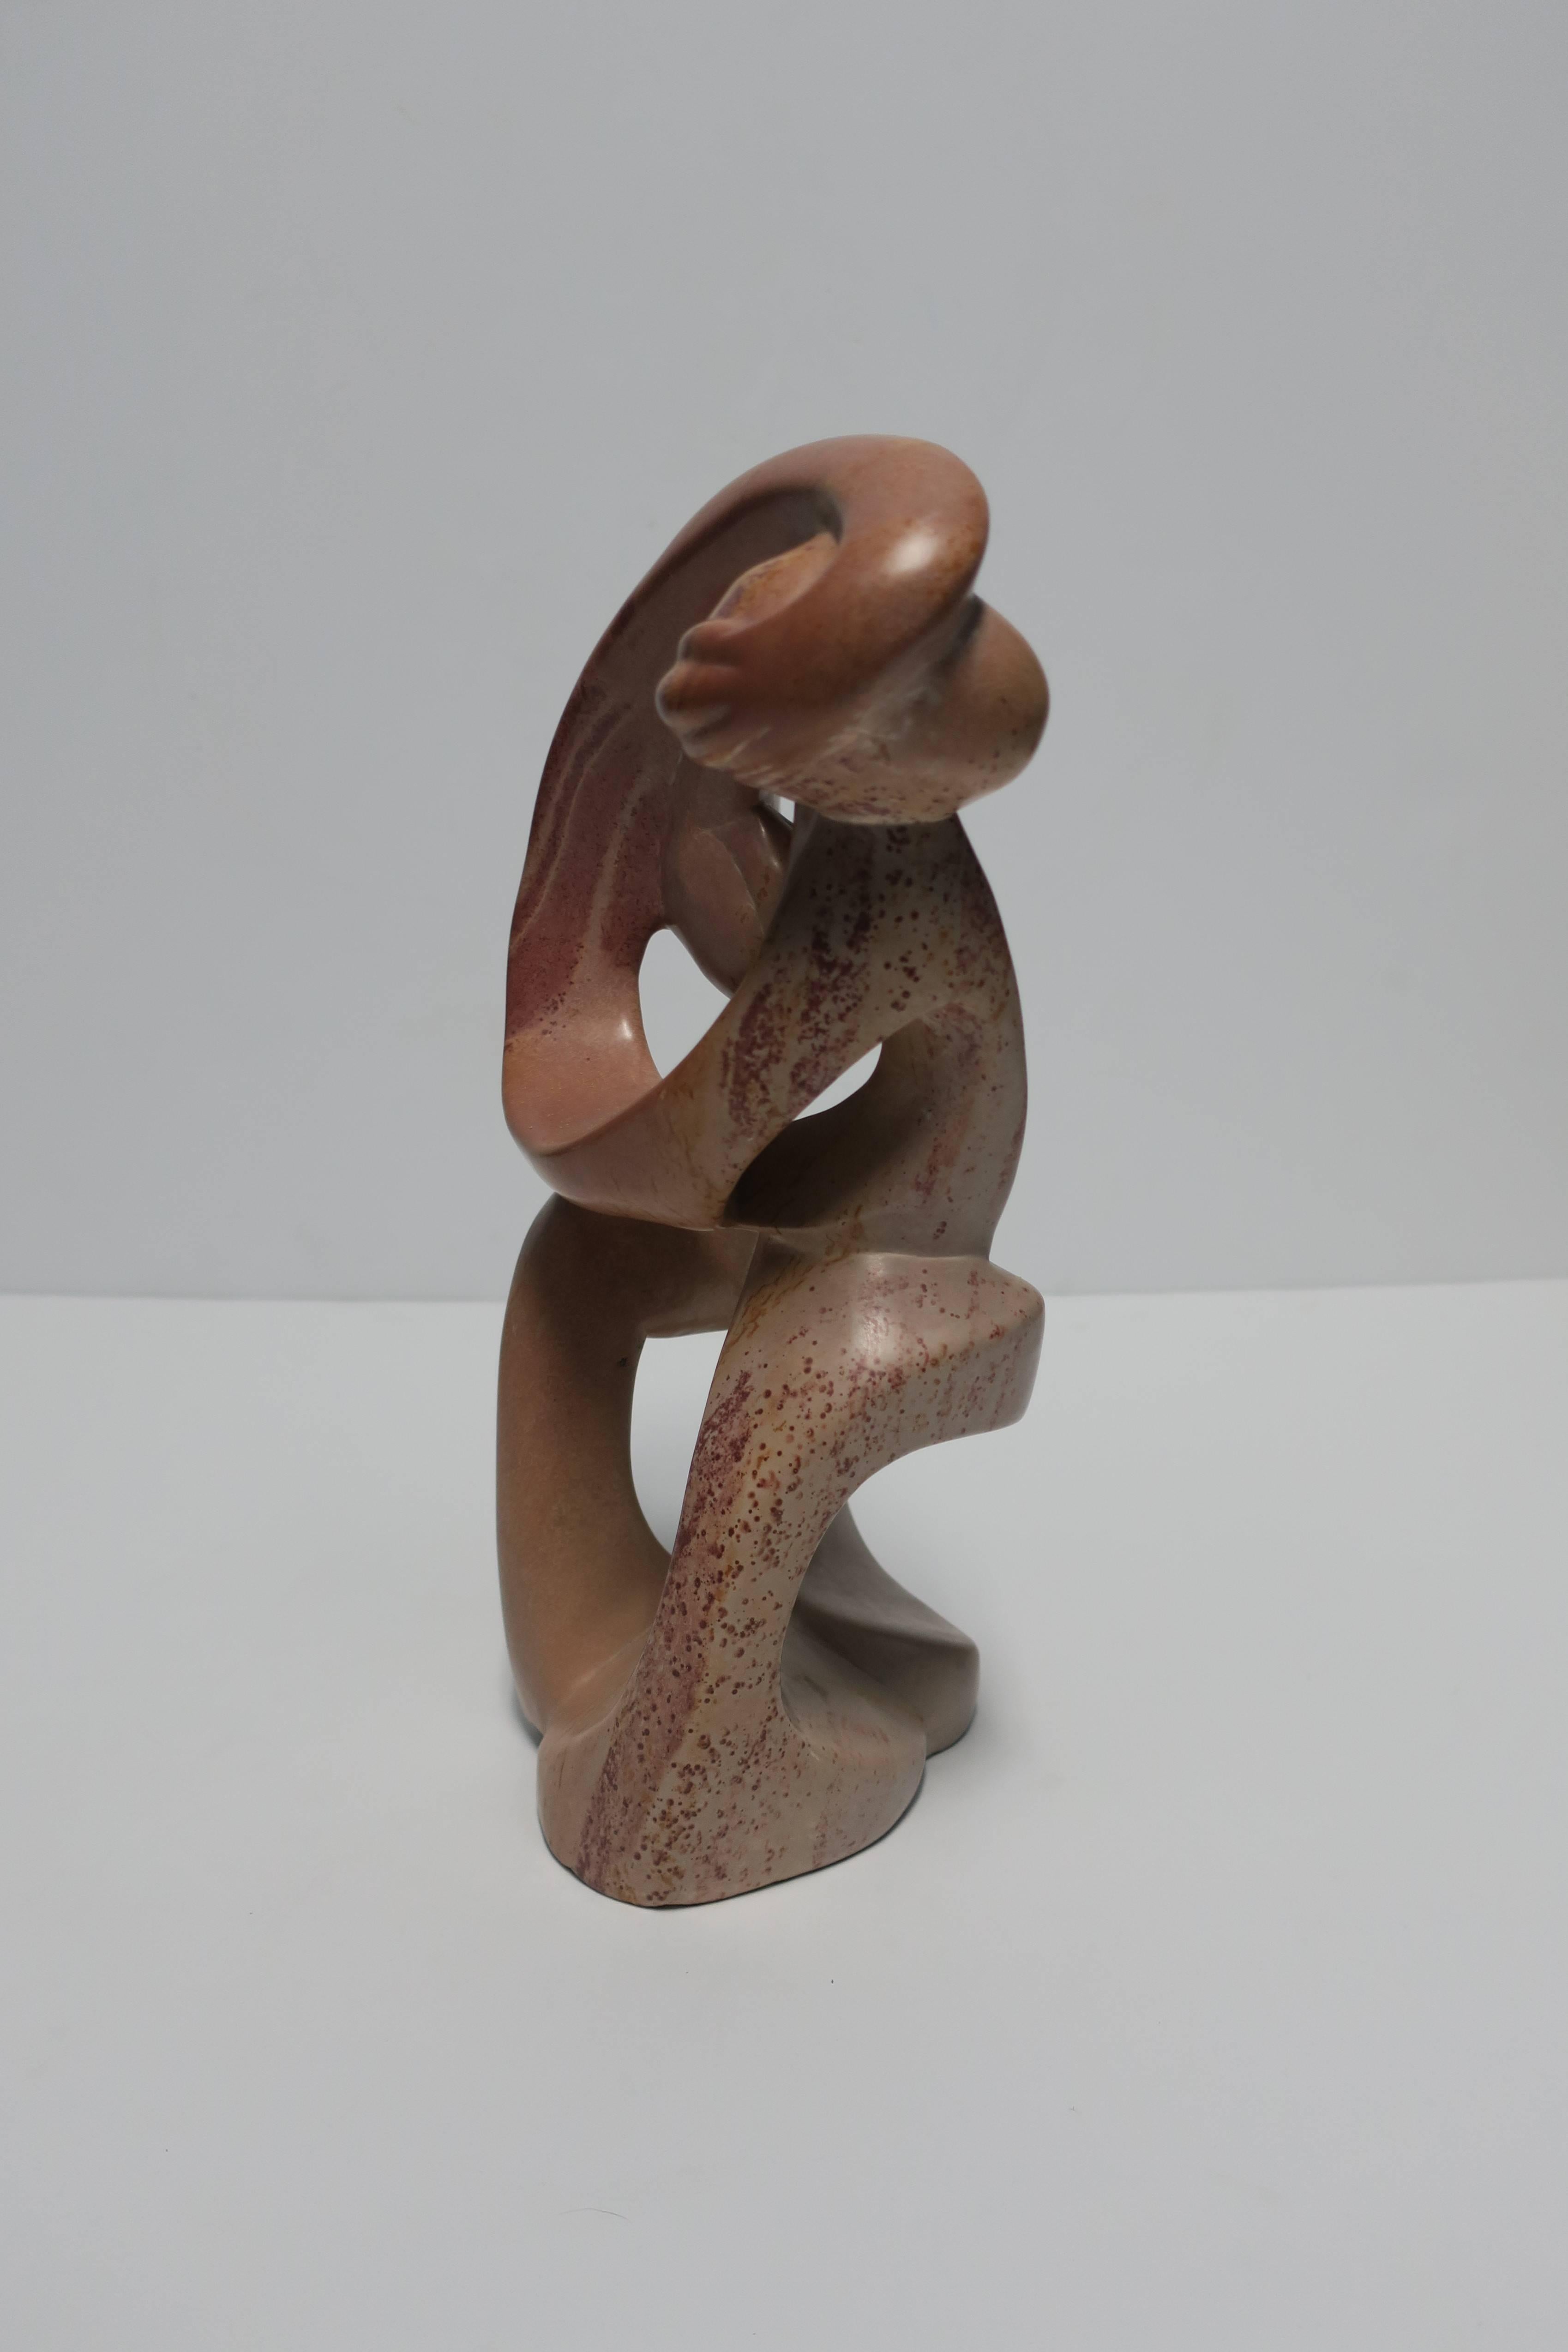 Stone Figurative Sculpture 1